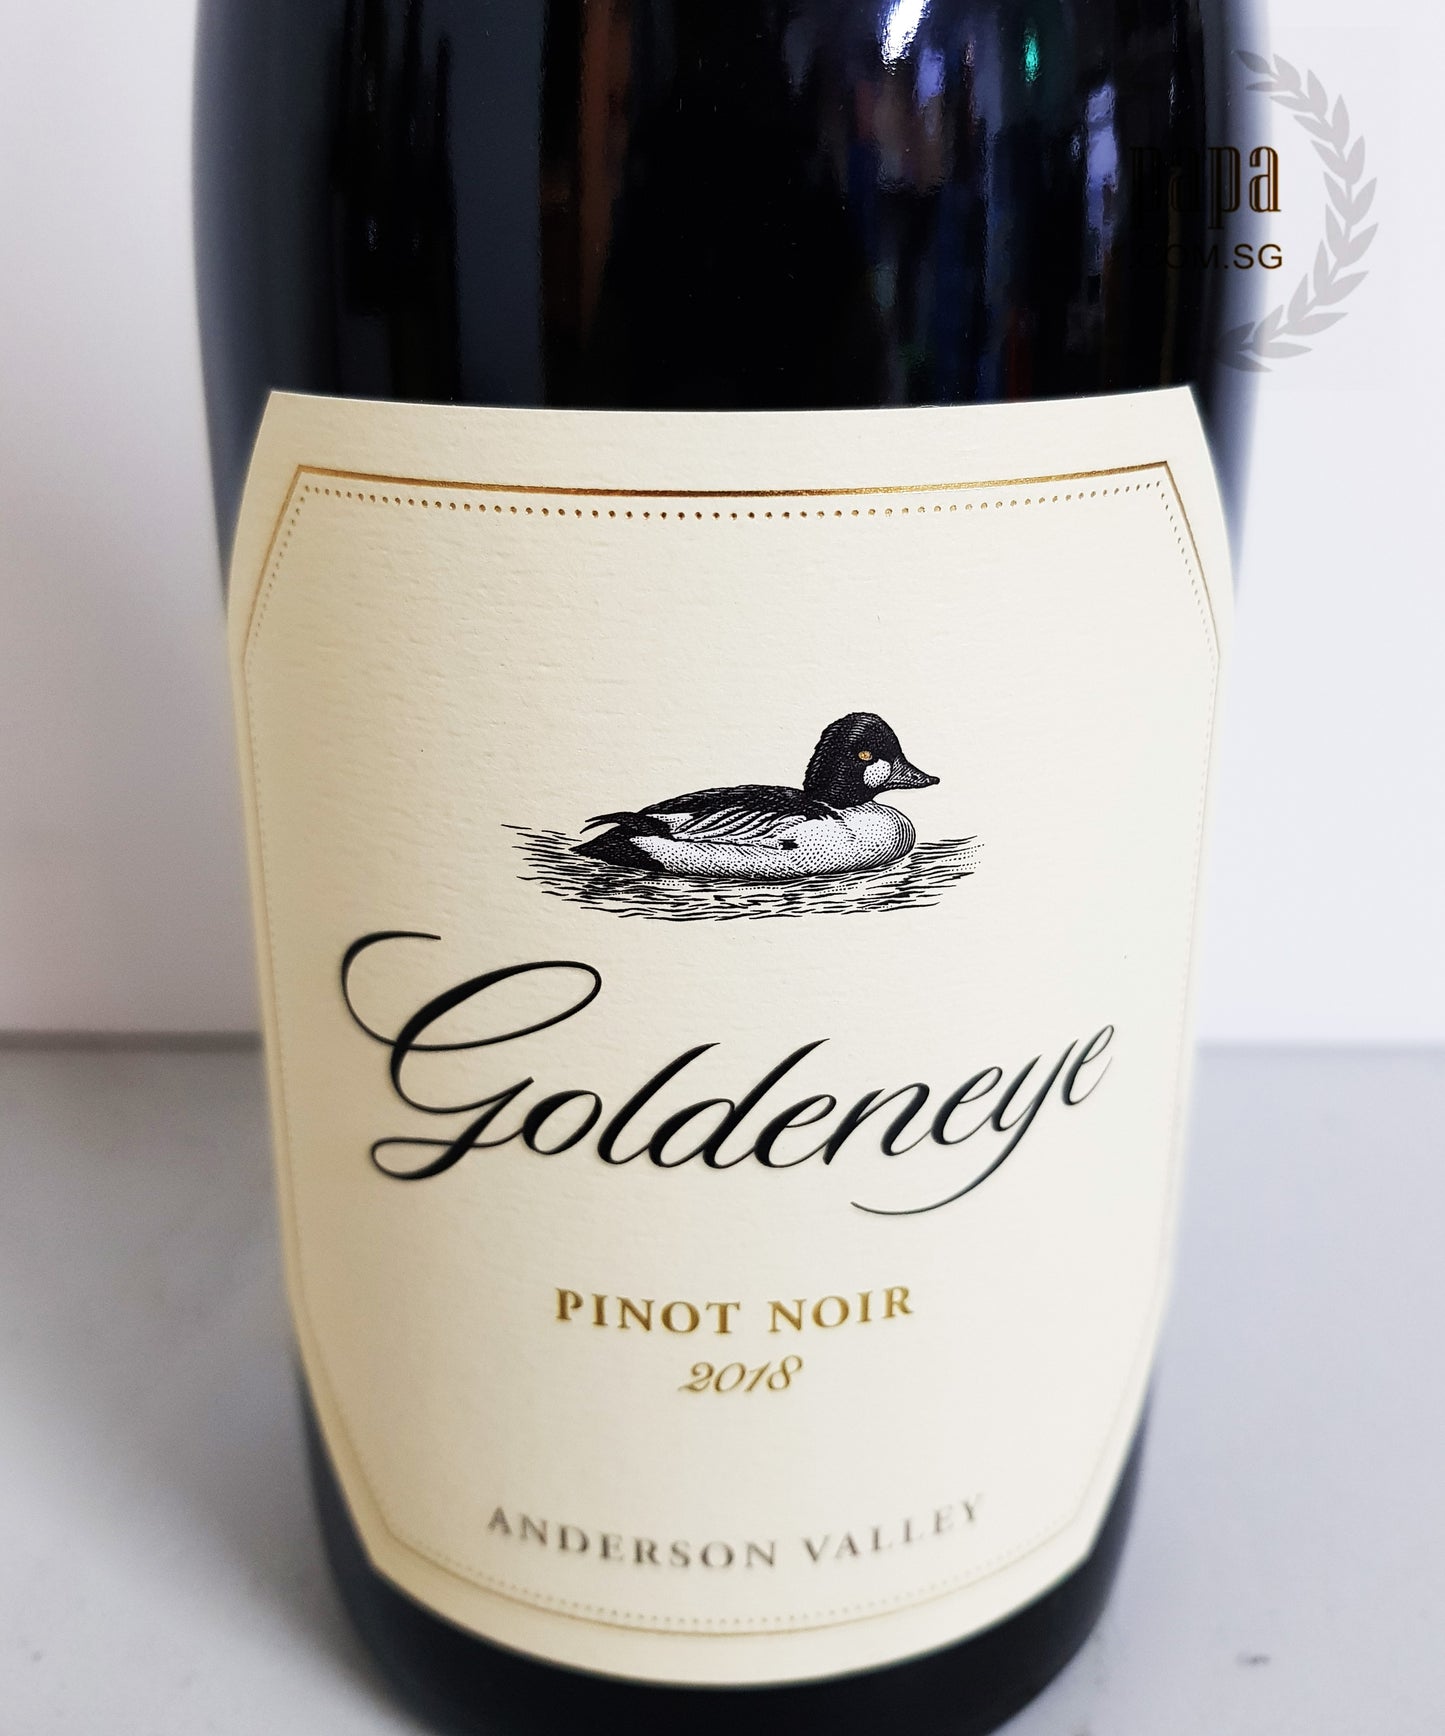 Duckhorn - Goldeneye Pinot Noir 2018 (Sustainable Vinicultural)